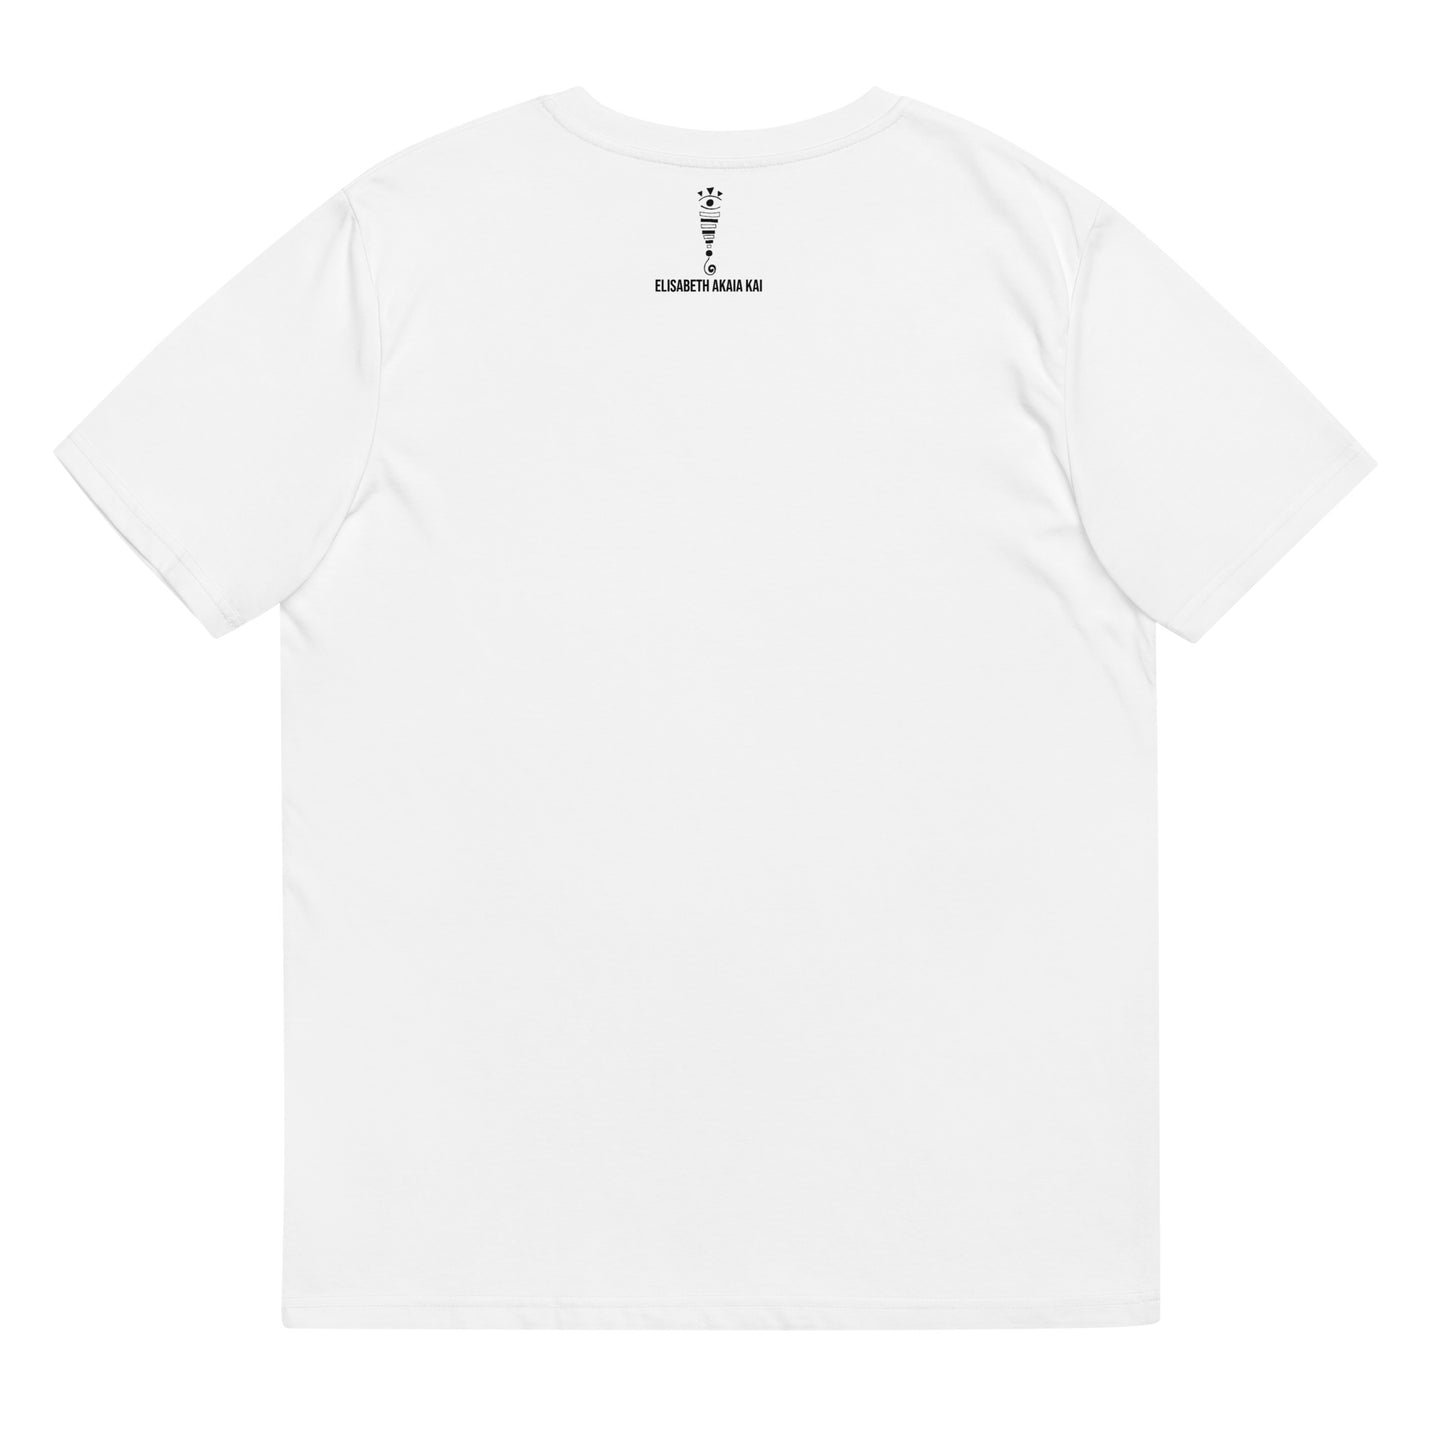 QUEEN - Camiseta unisex de algodón orgánico